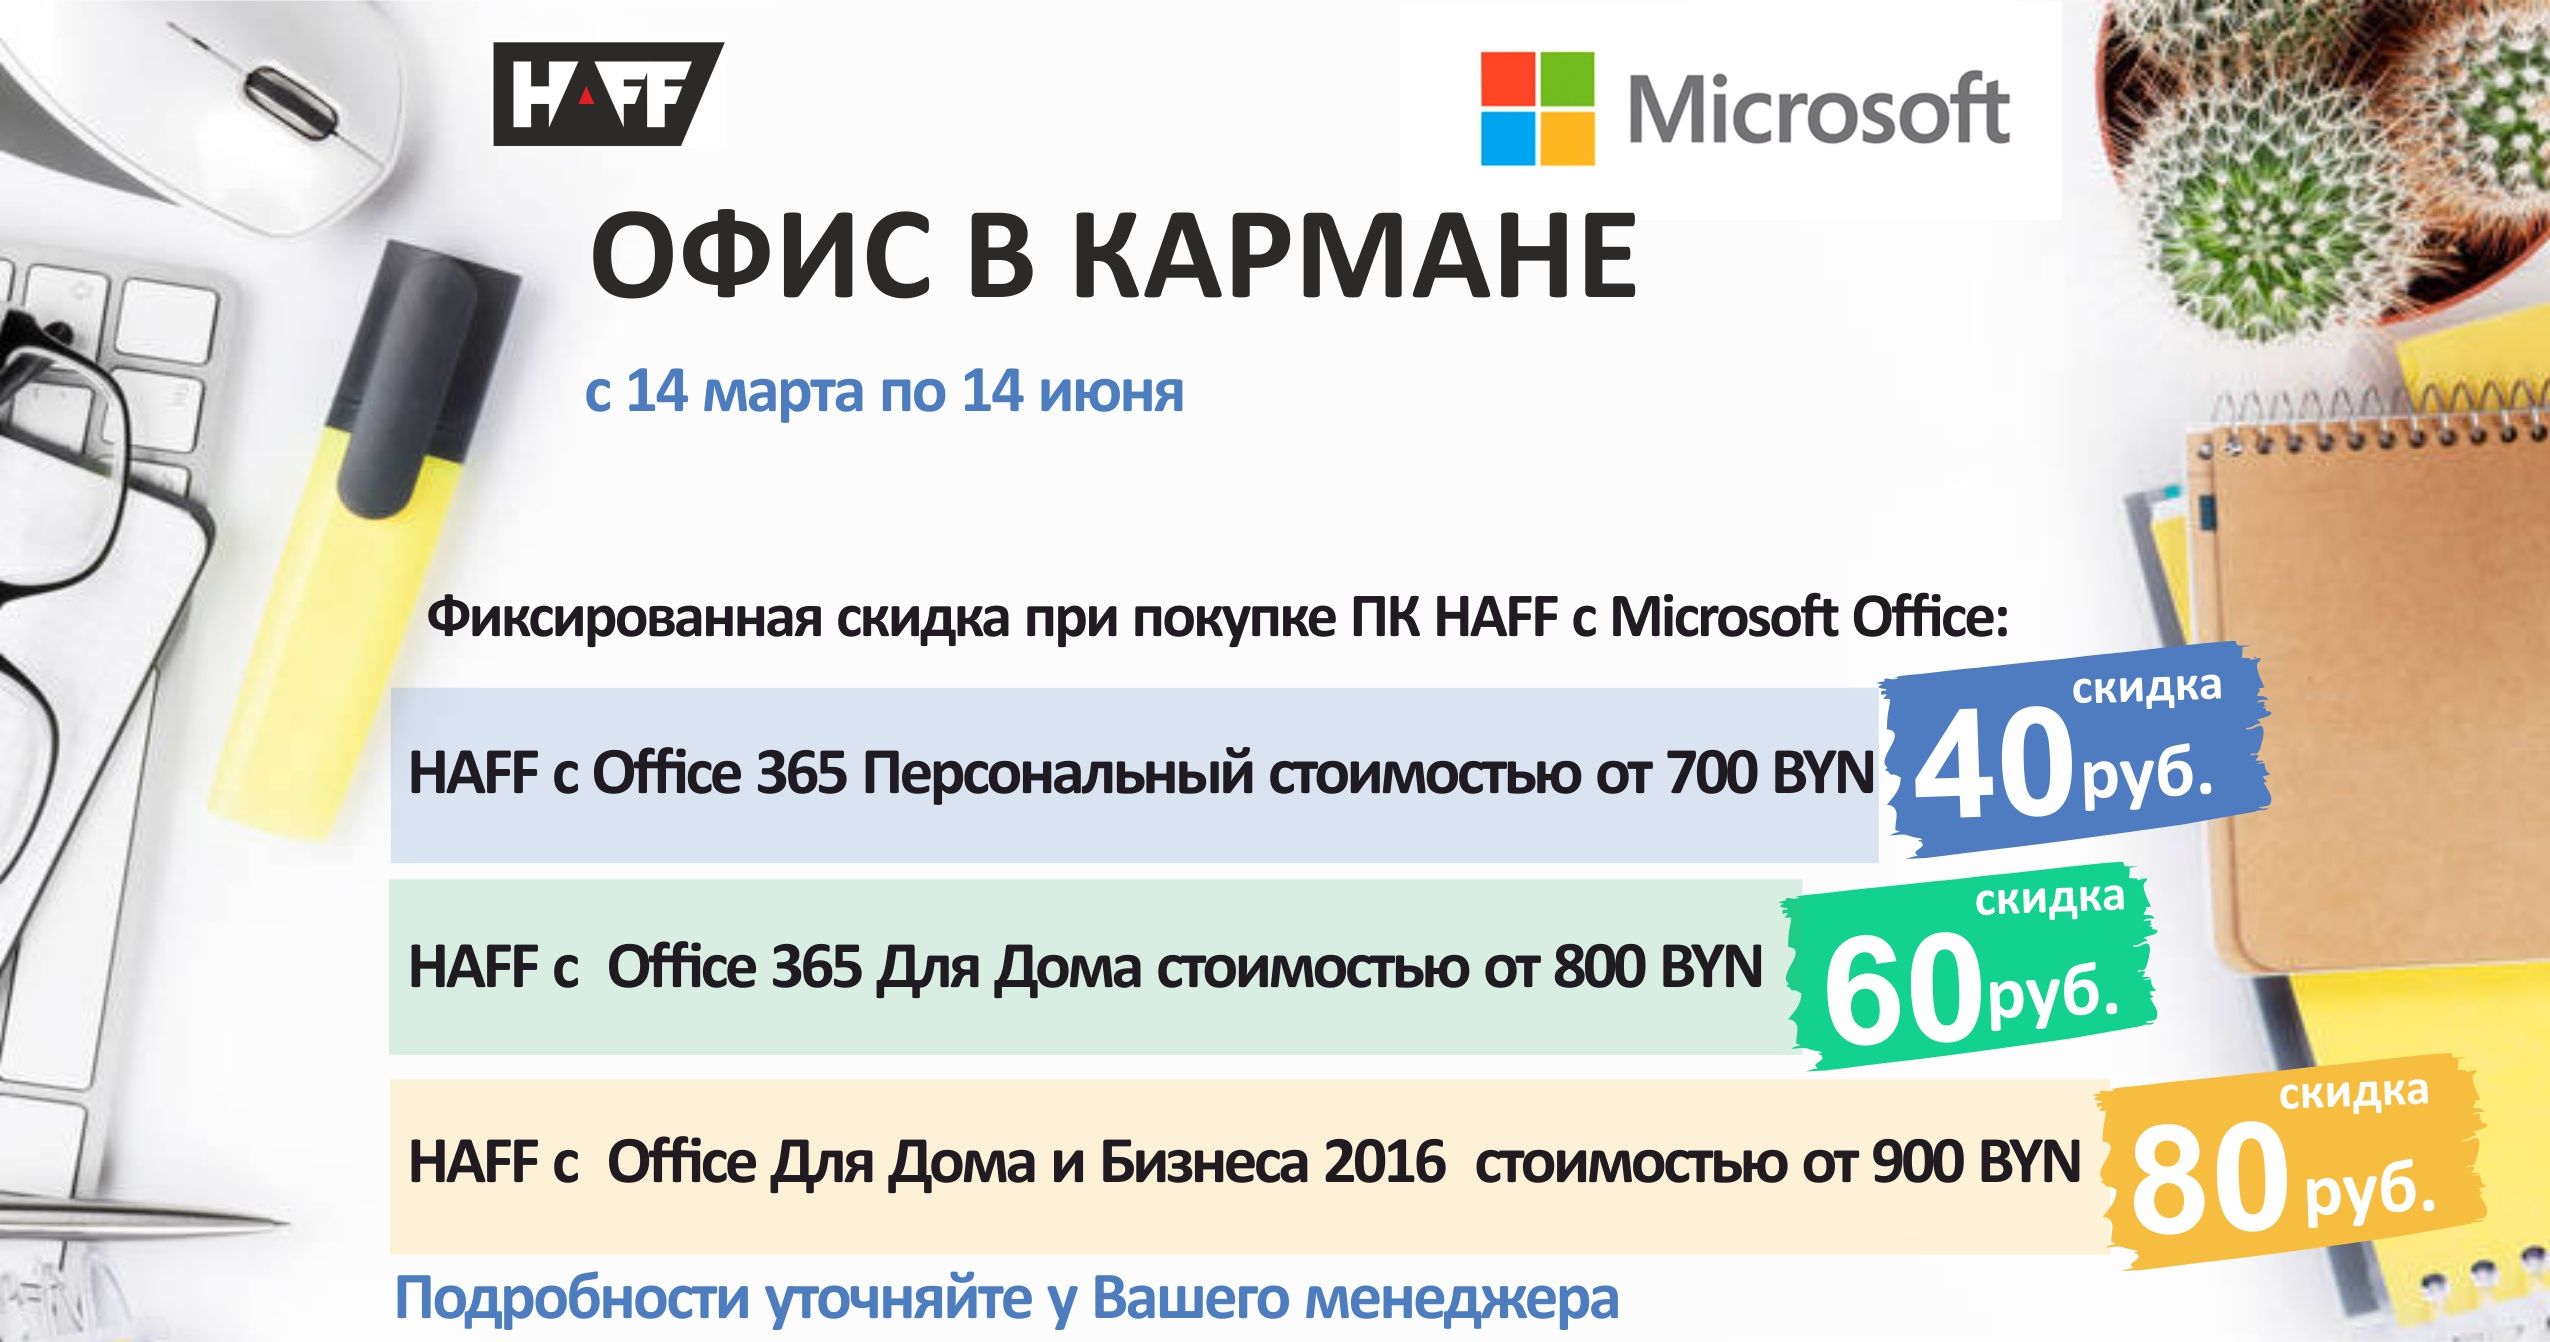 Офис в кармане: фиксированная скидка на ПК HAFF с Microsoft Office